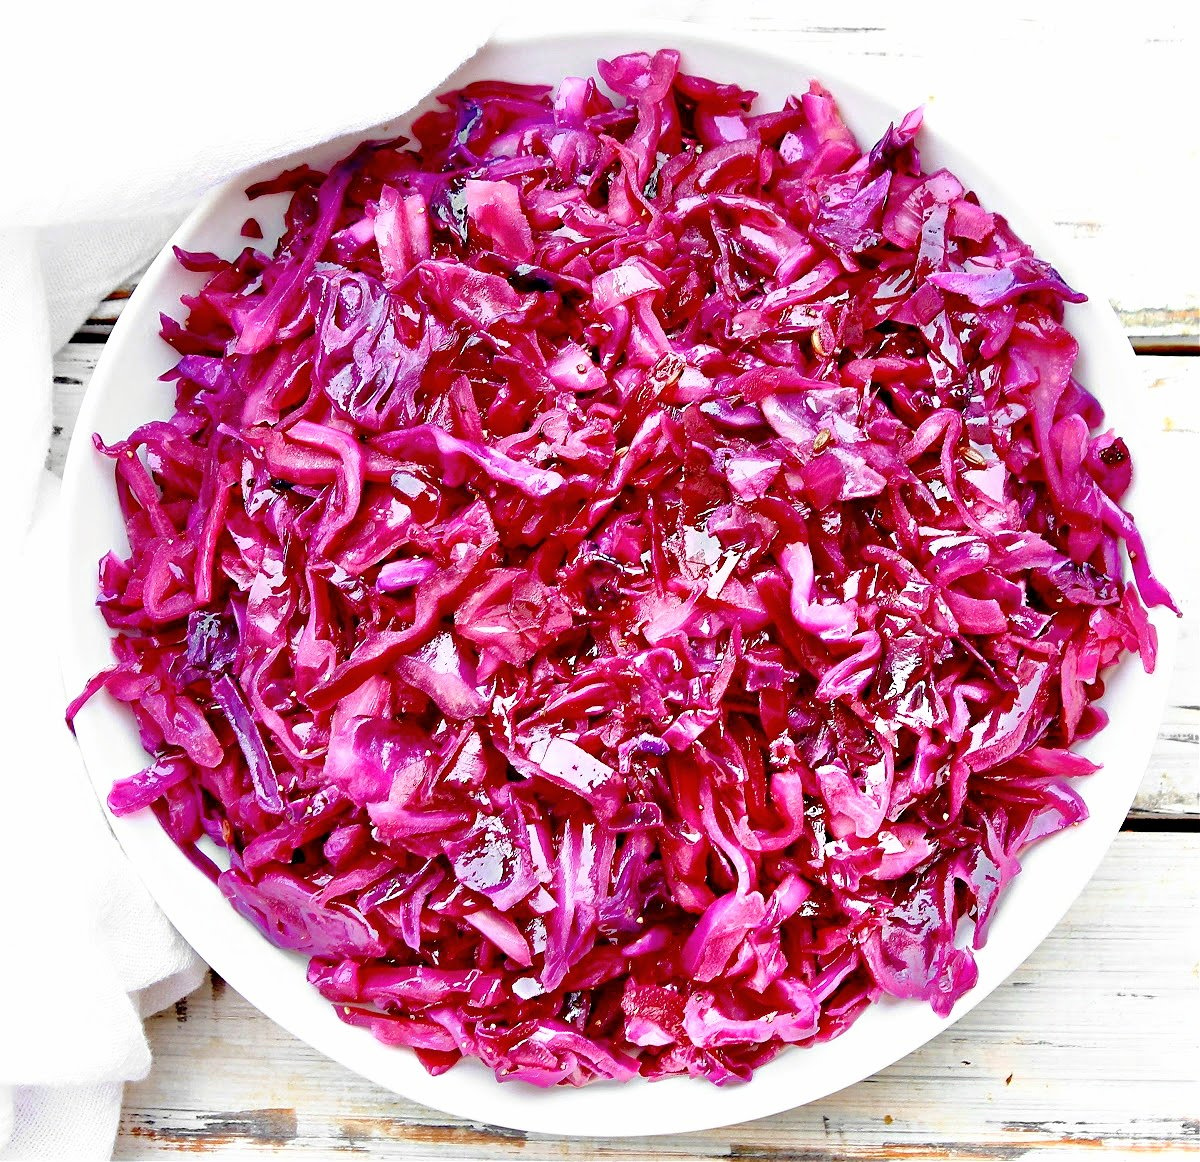 Braised Red Cabbage Recipe 